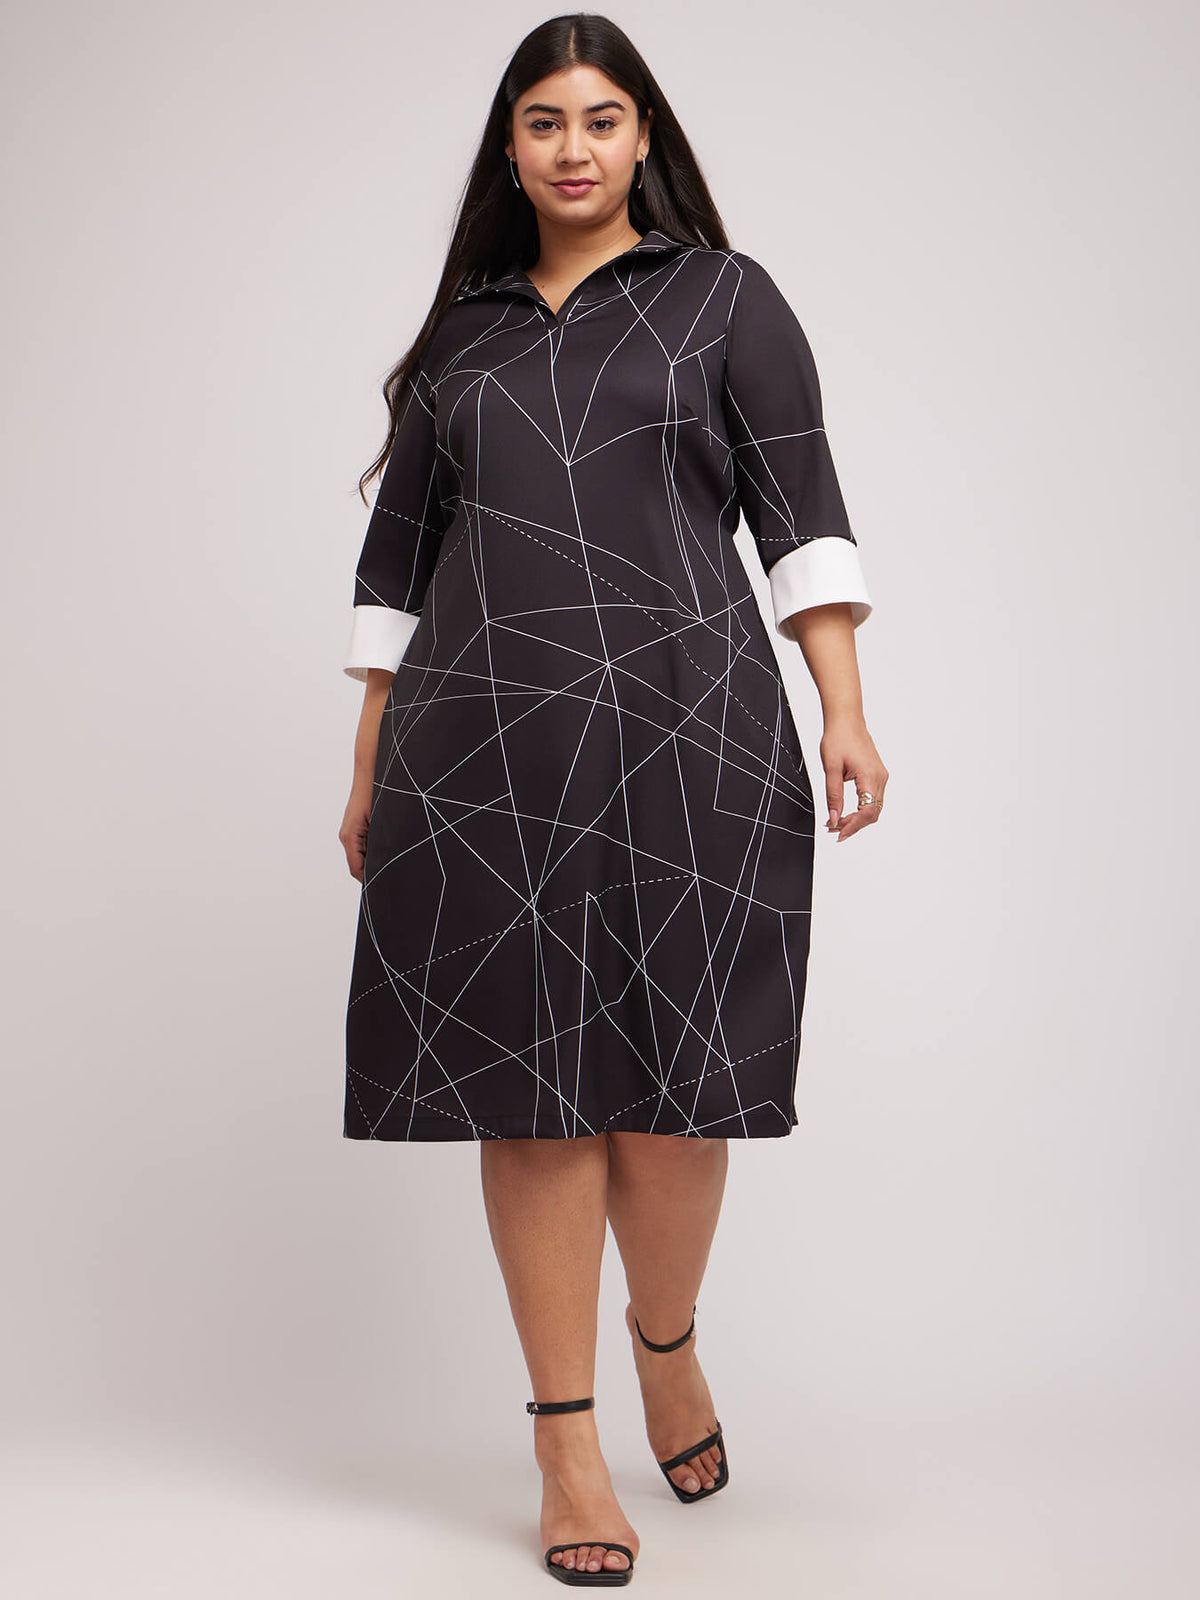 Geometric Print Shift Dress - Black And White